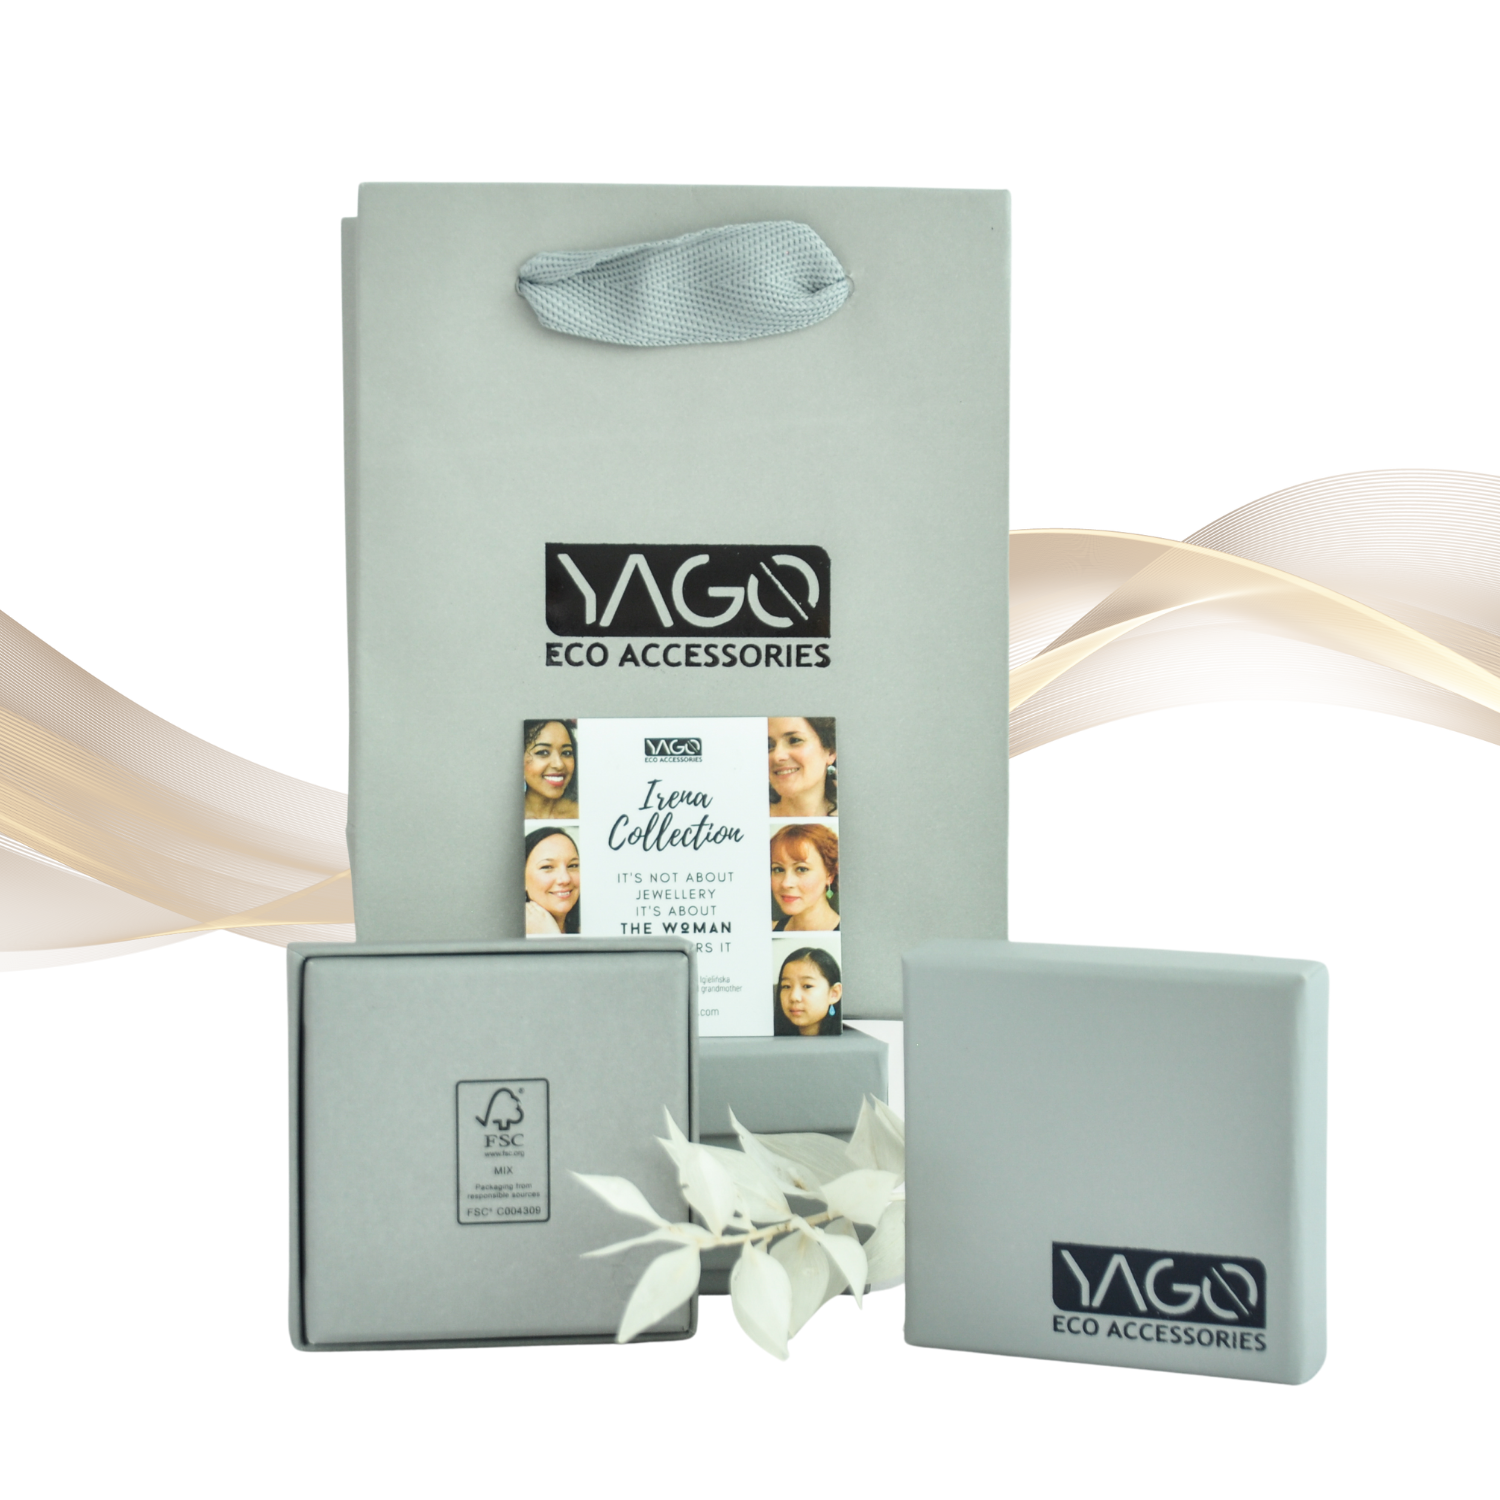 eco packaging YagoEco handmade jewellery in London 